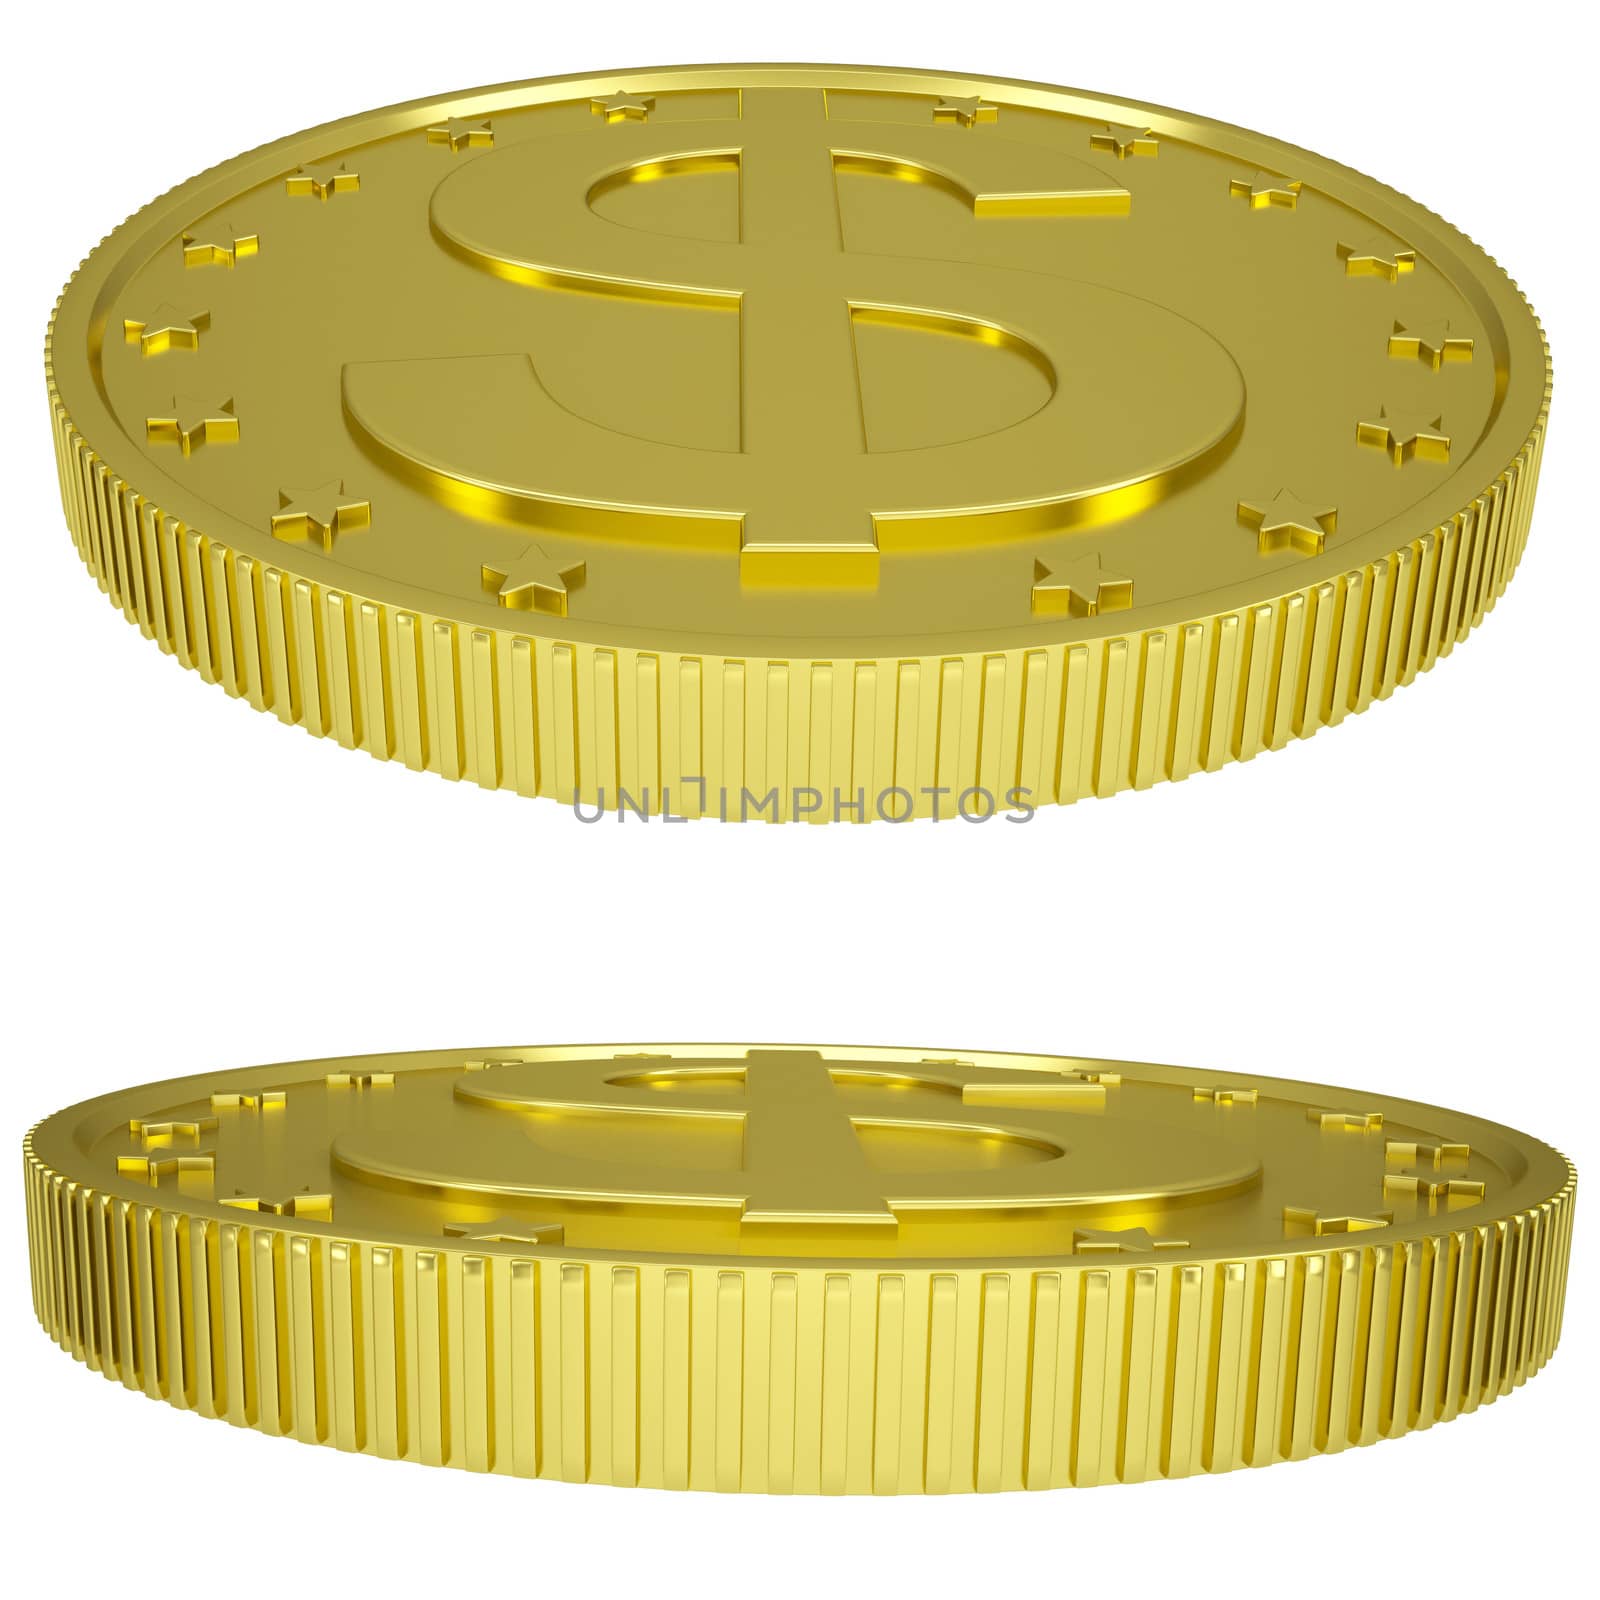 Gold dollars by cherezoff